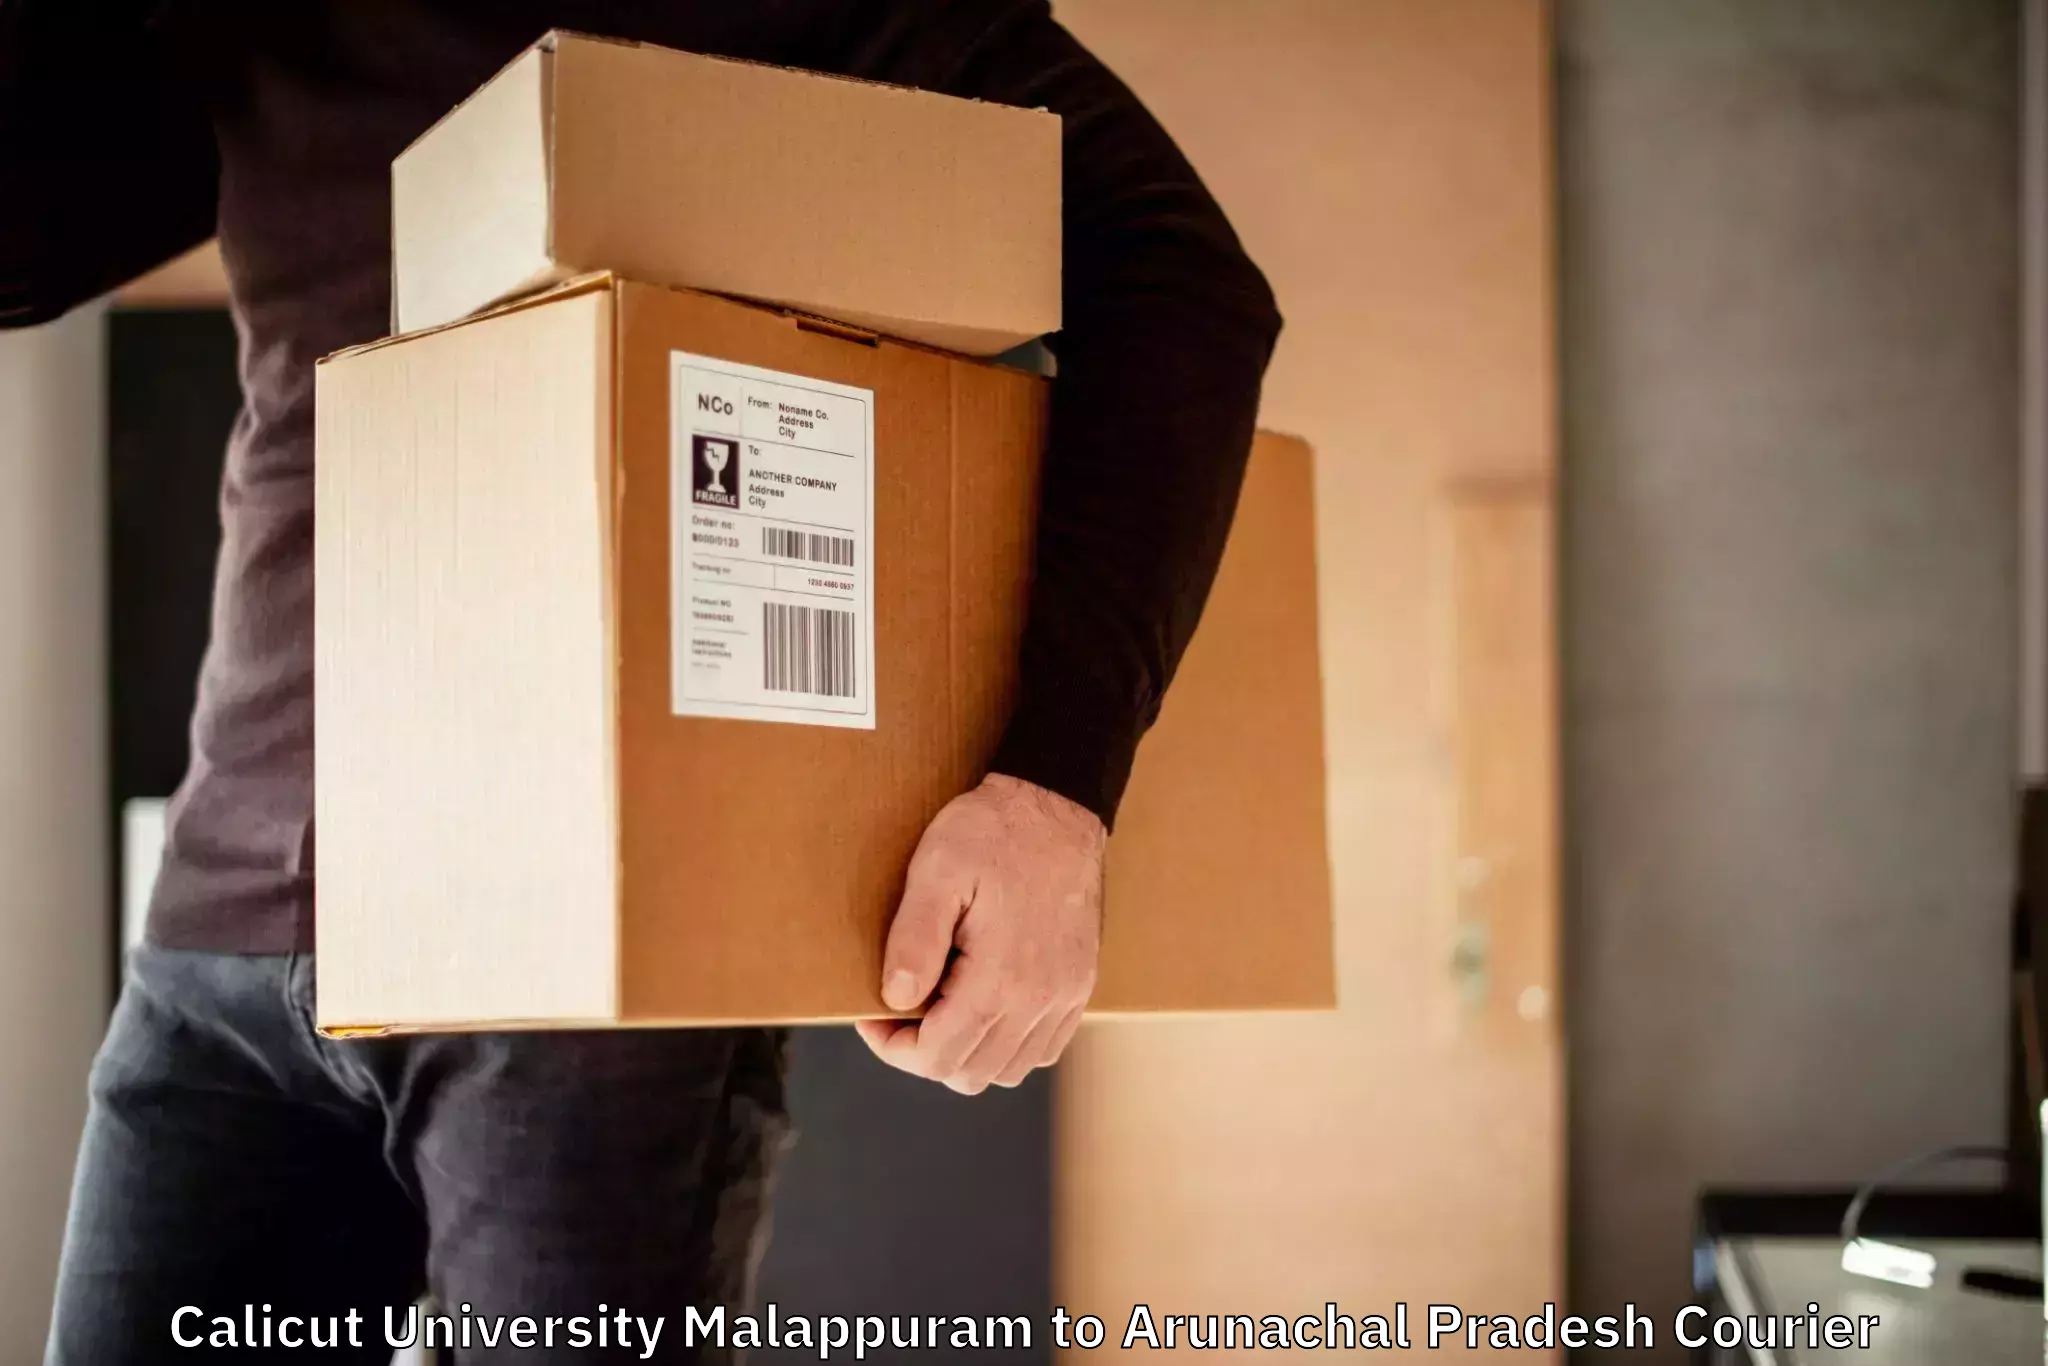 Residential courier service Calicut University Malappuram to Arunachal Pradesh